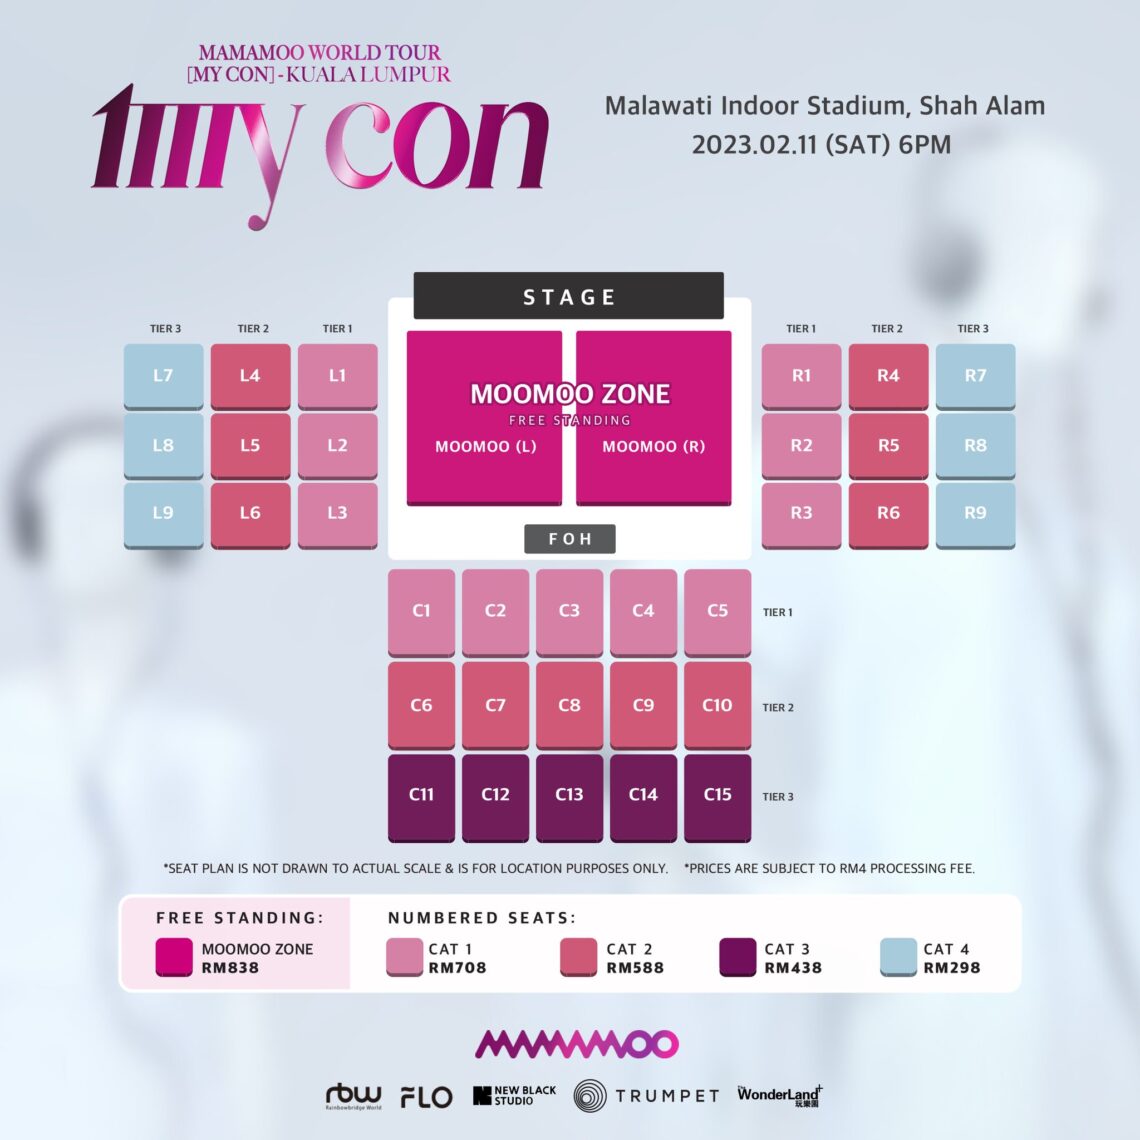 MAMAMOO Malaysian Concert Tickets & Seating Plan Revealed Hype Malaysia